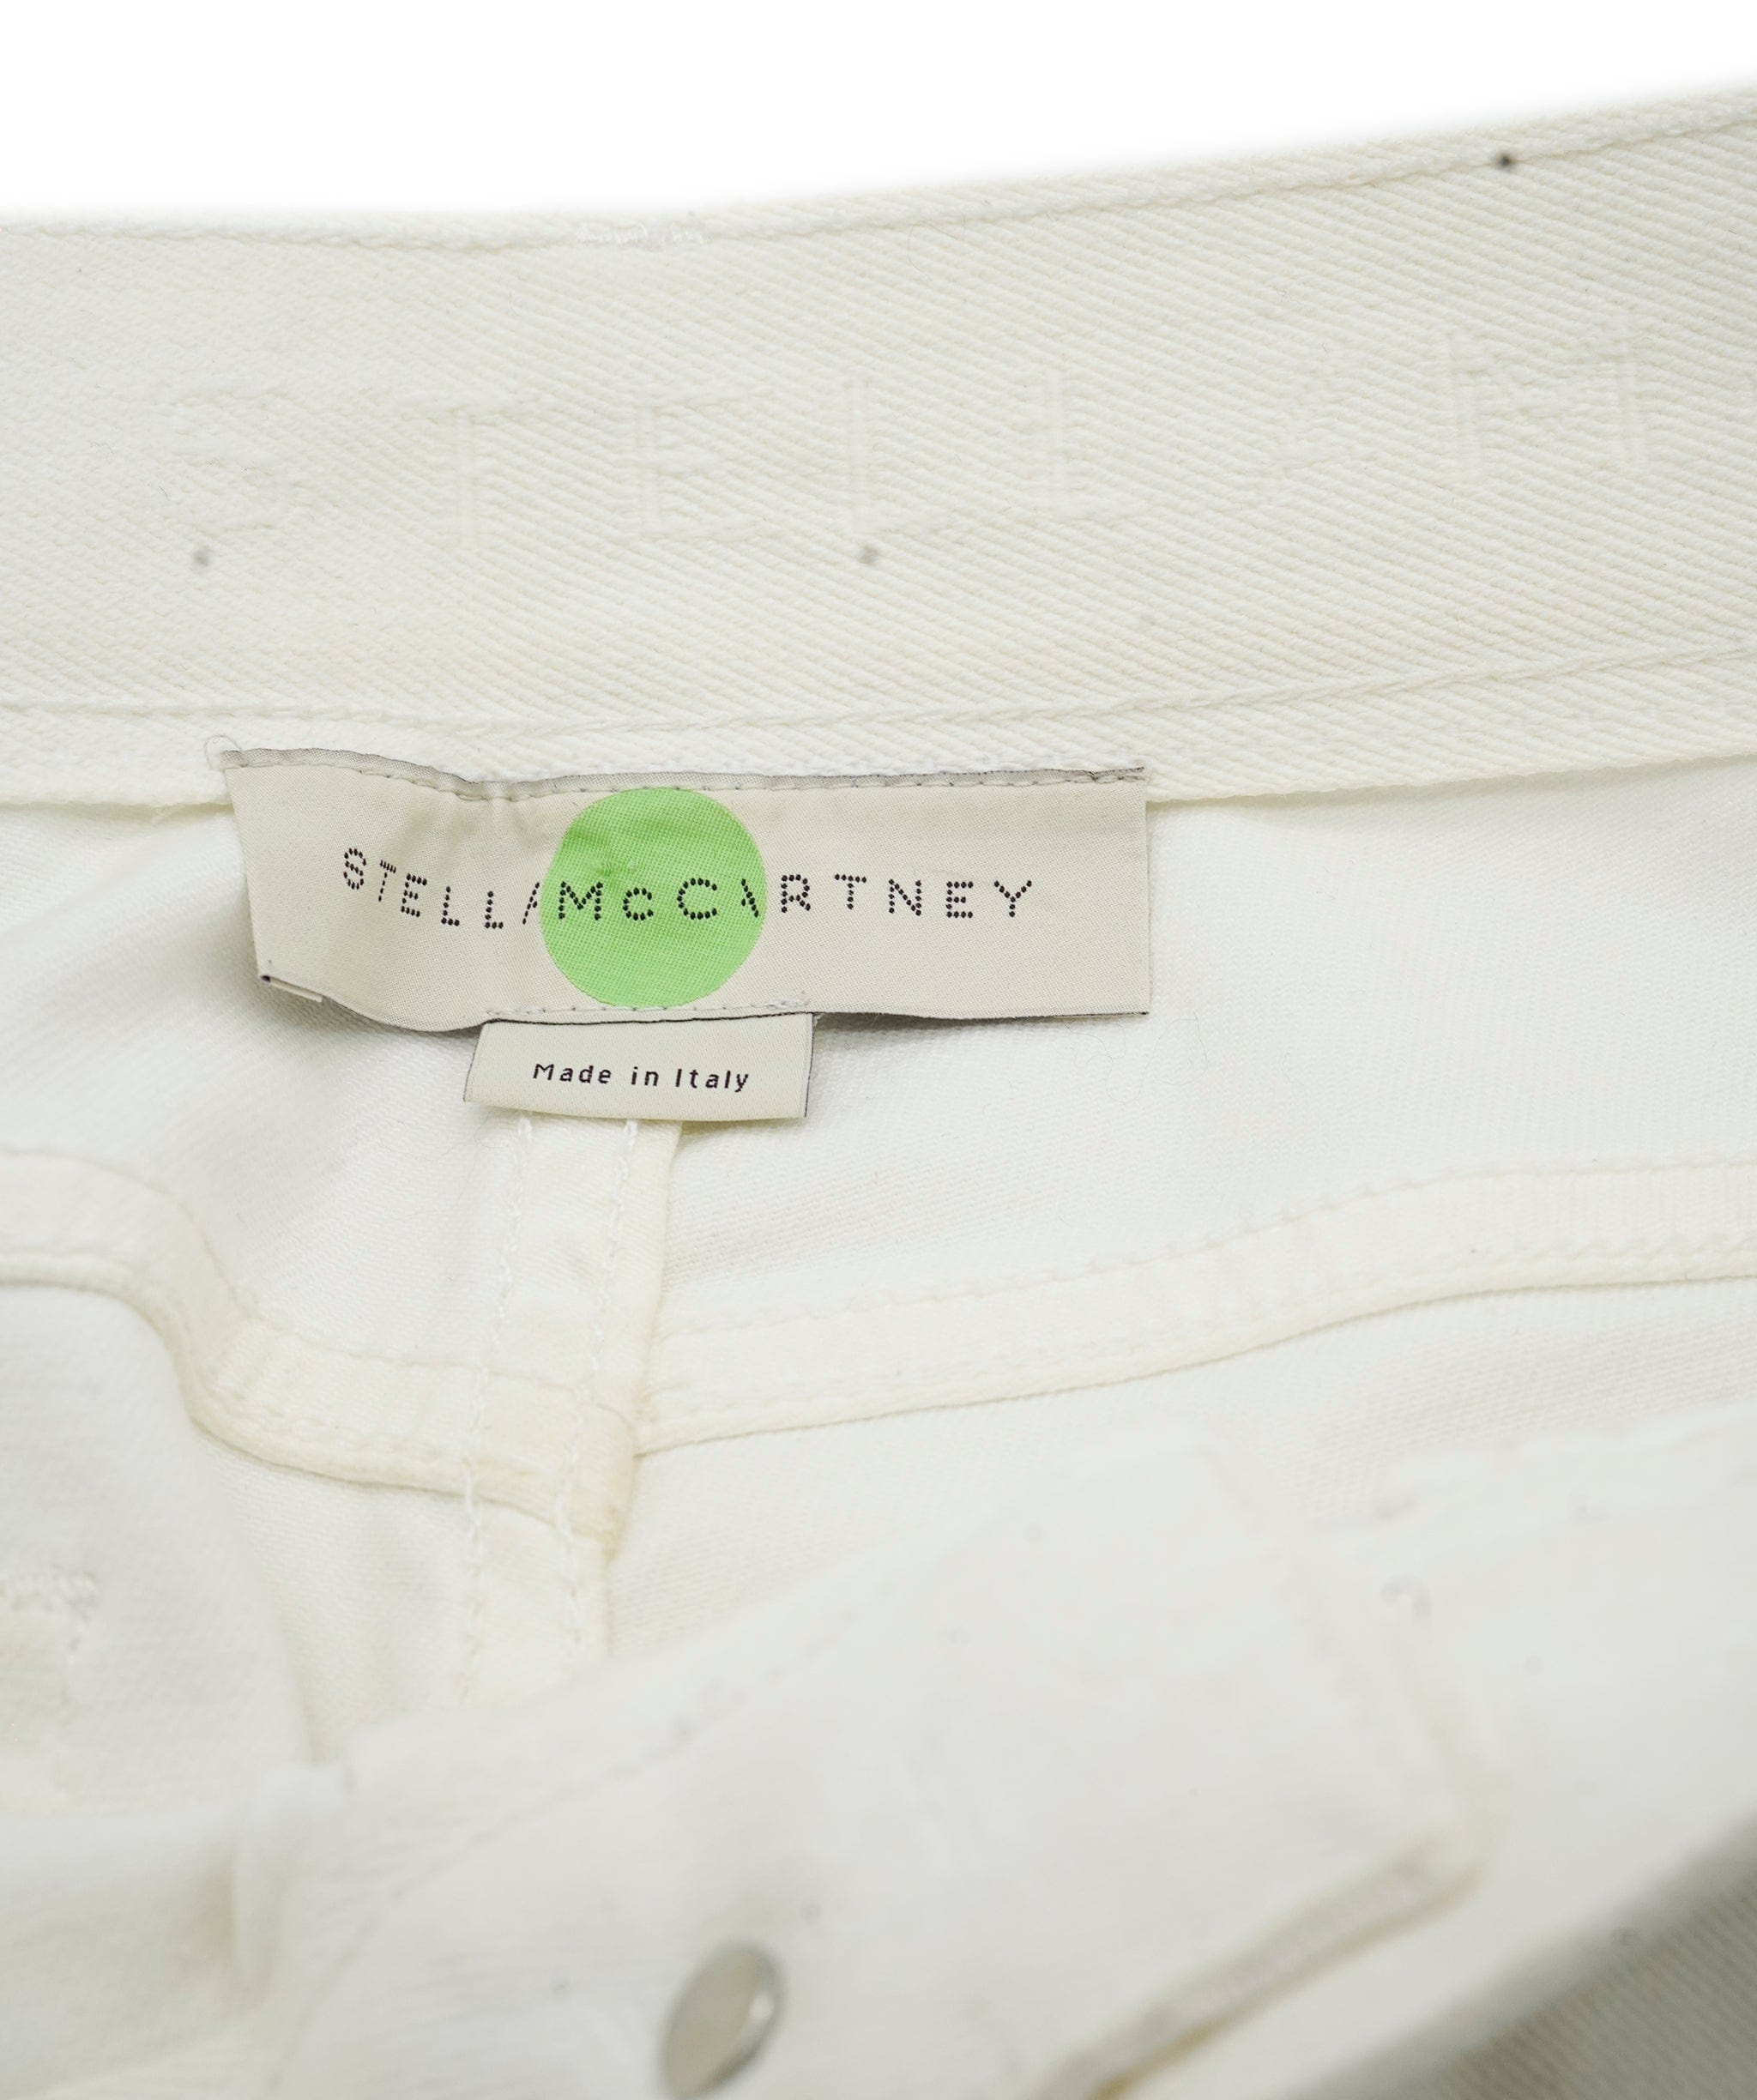 Stella McCartney Stella McCartney white skinny jeans size 27 AEL1120